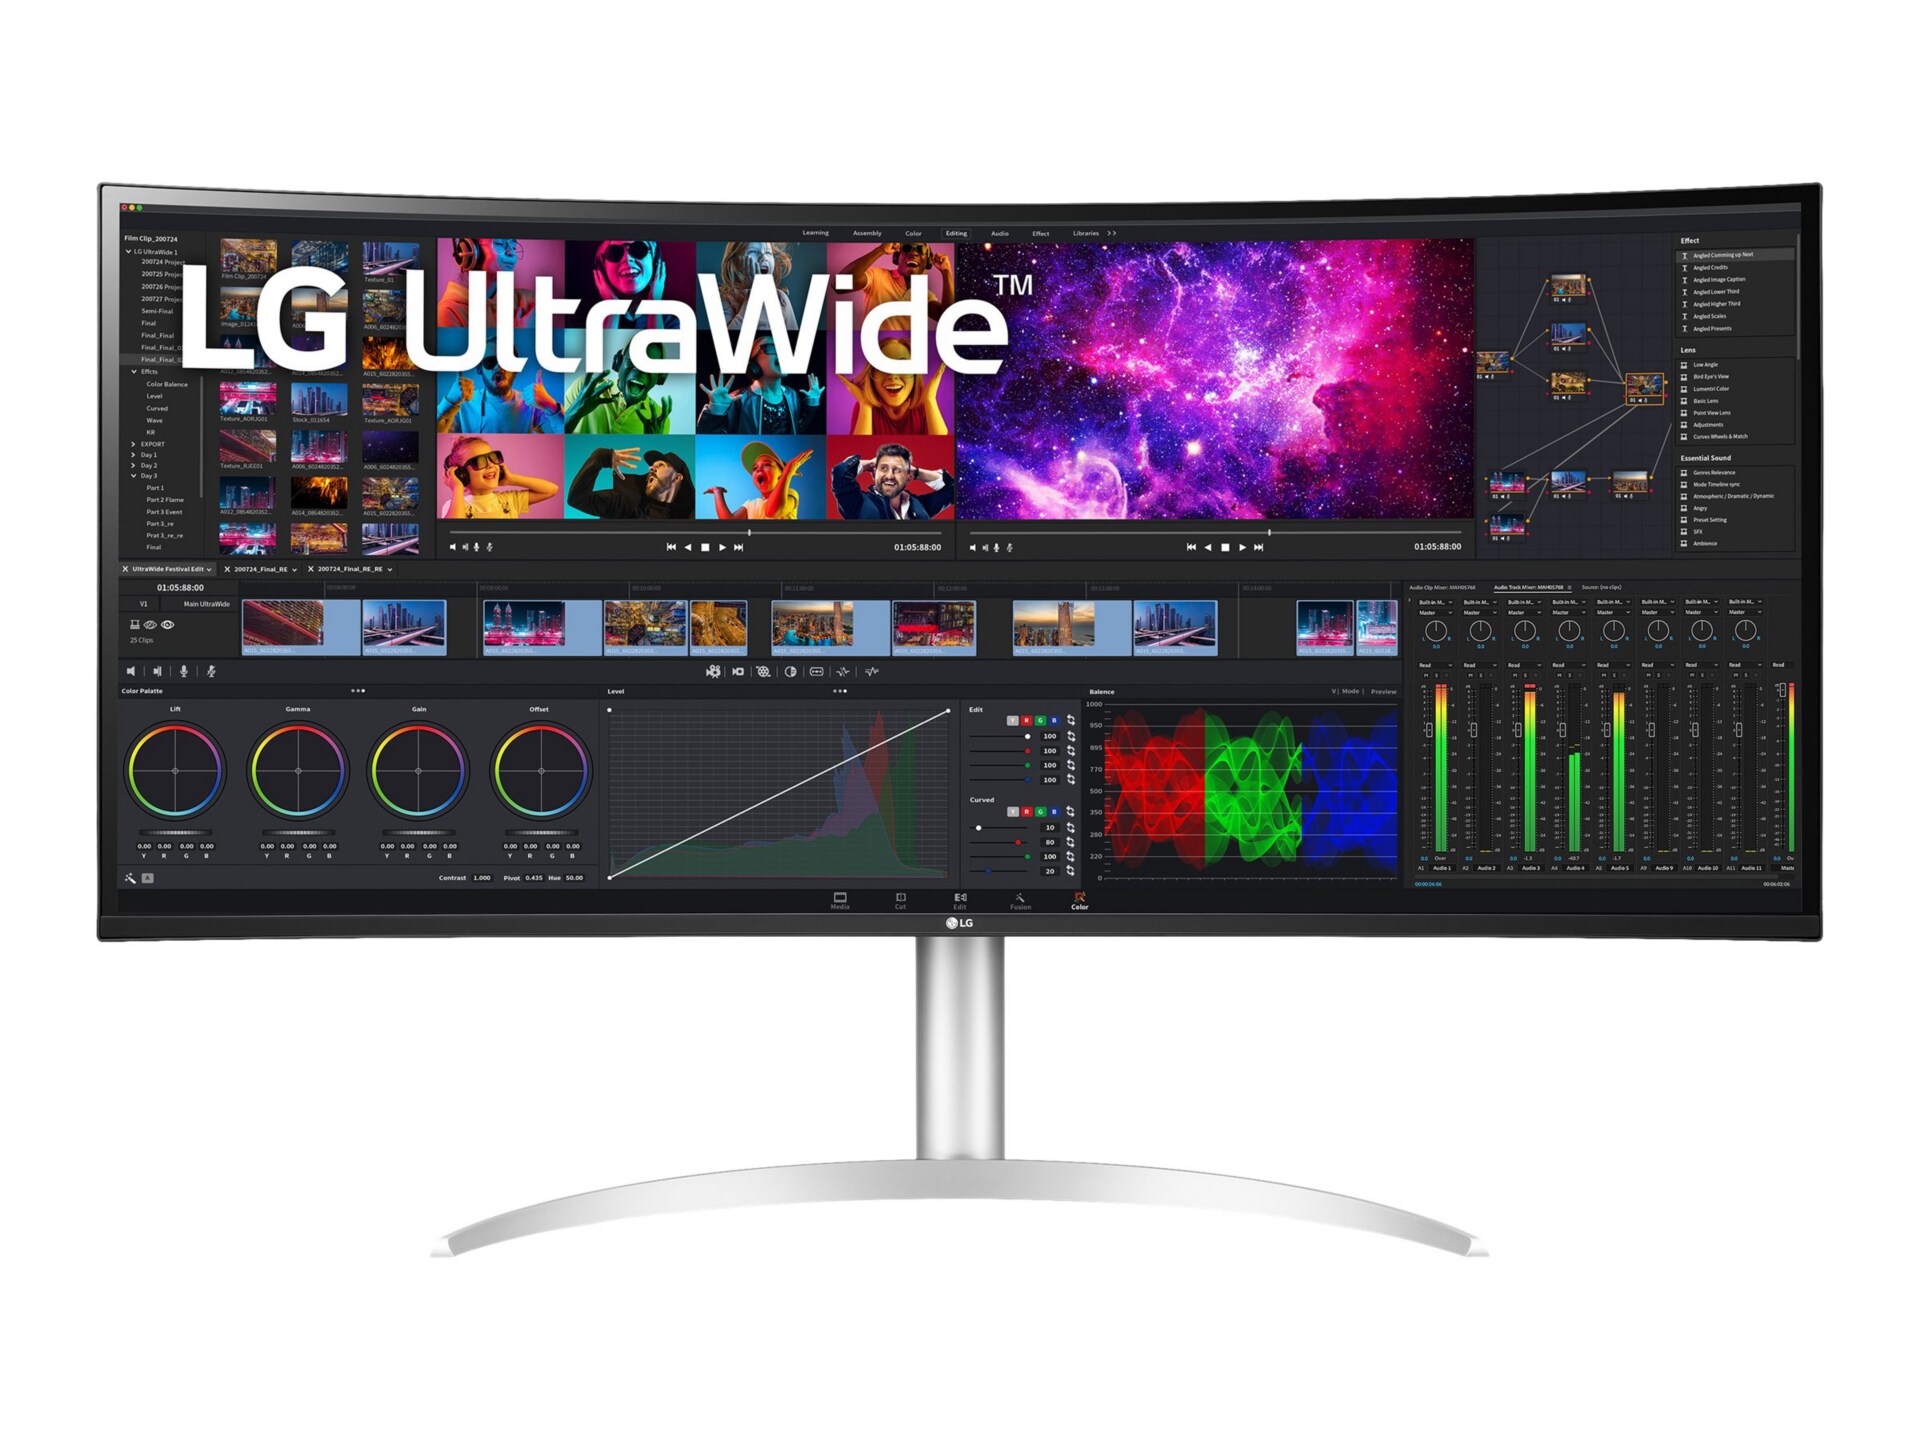 LG 40WP95C-W - LED monitor - curved - 39.7" - HDR